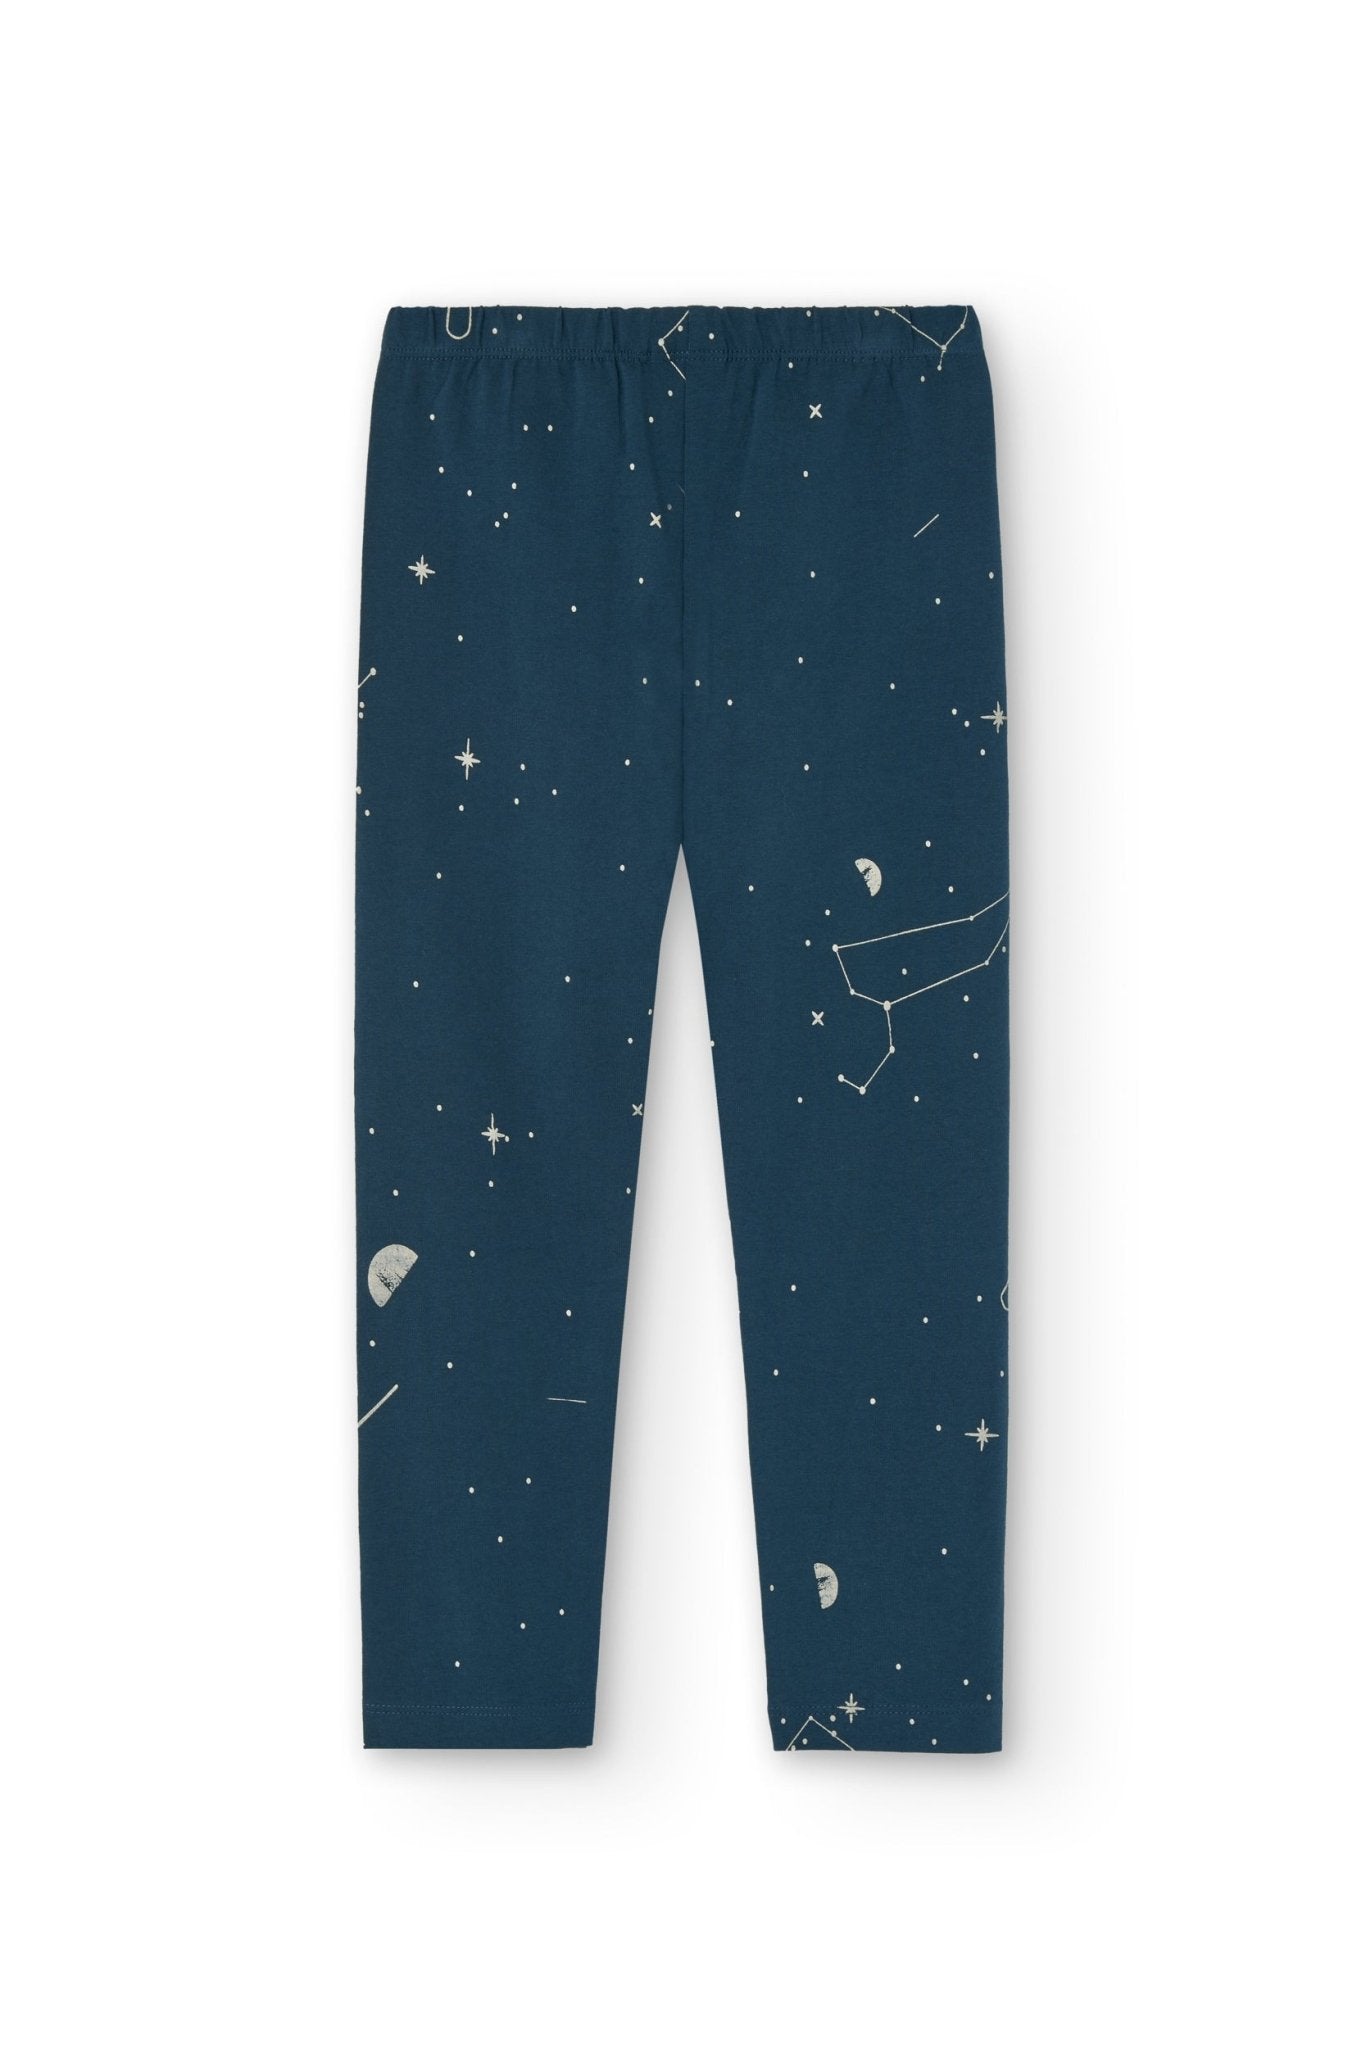 Galatea leggings blue constellations - TIRALAHILACHA